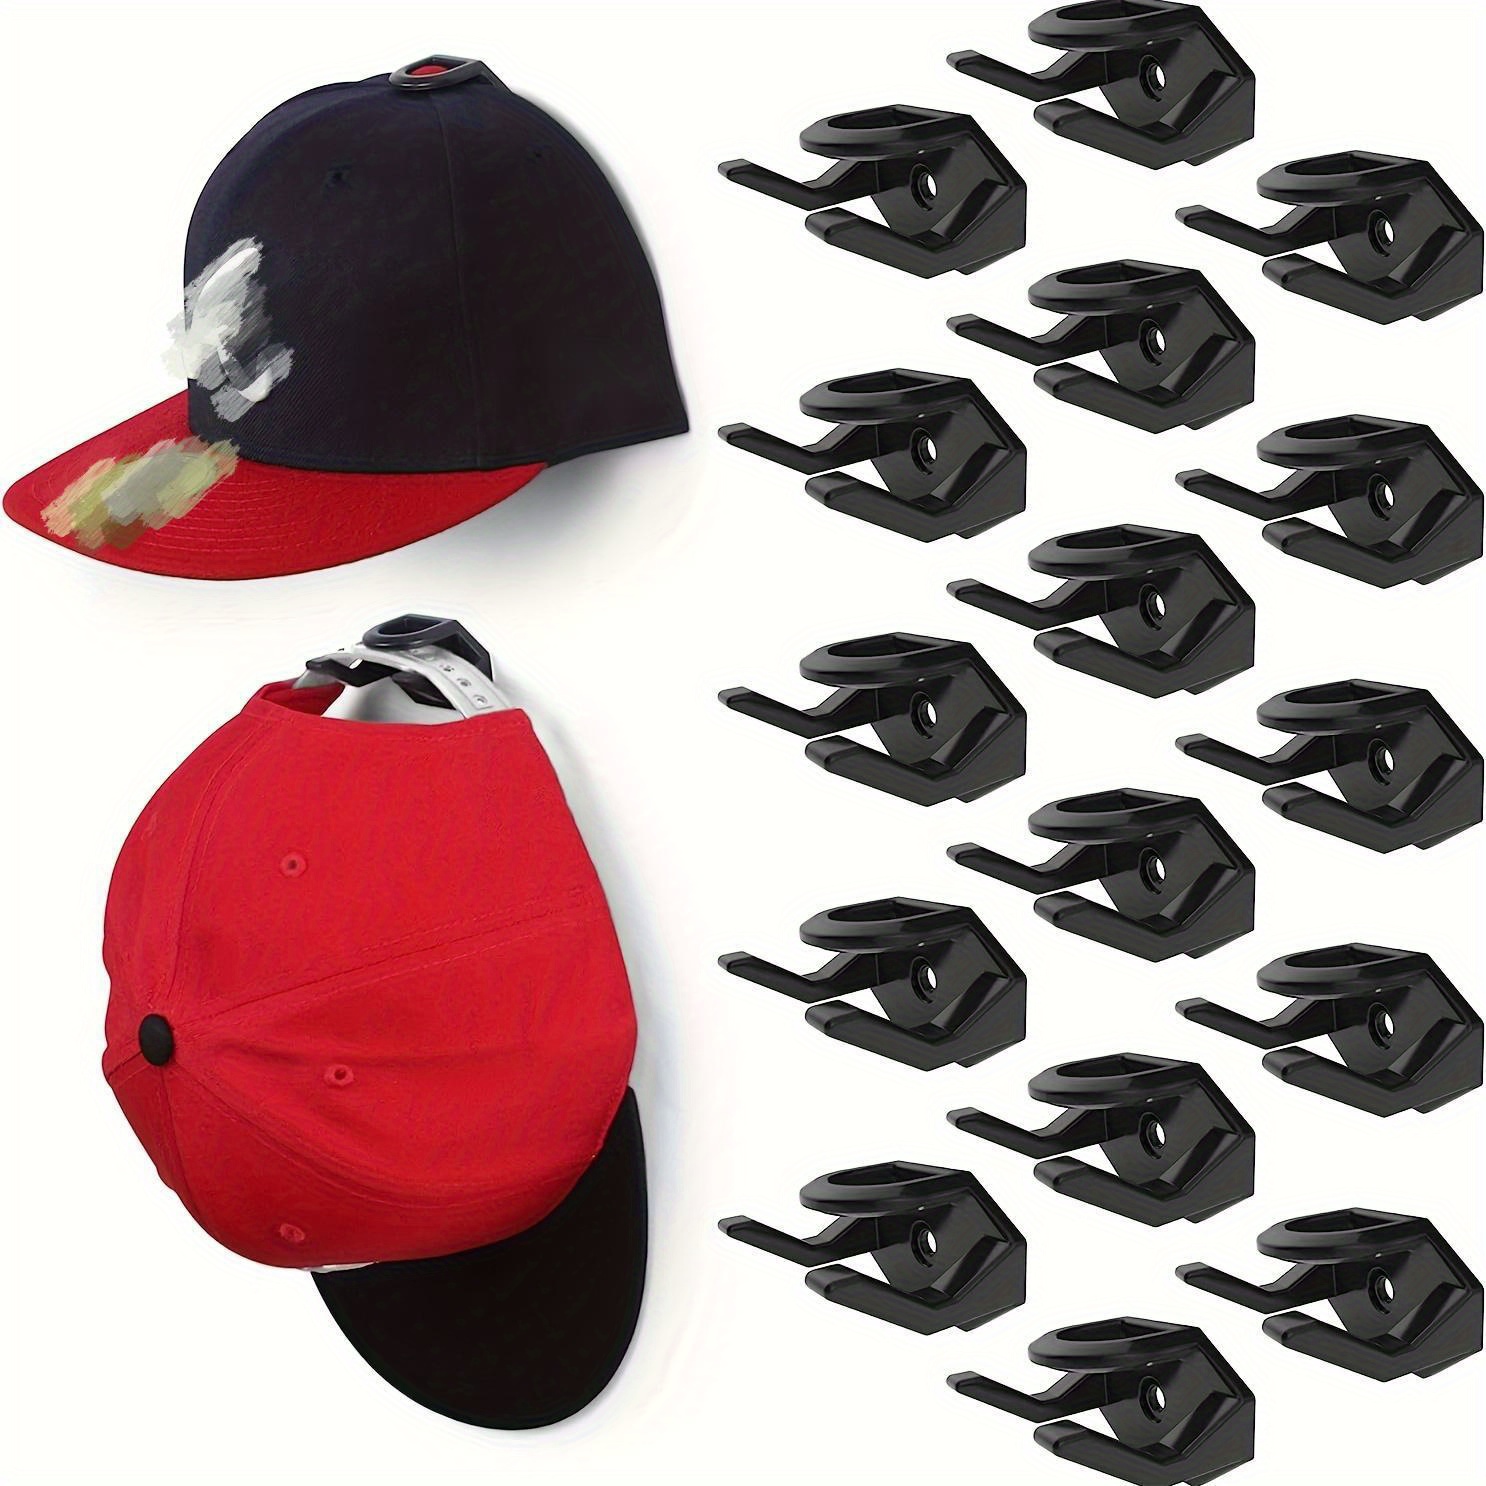  LEKUSHA Perchero adhesivo para 10 sombreros para pared